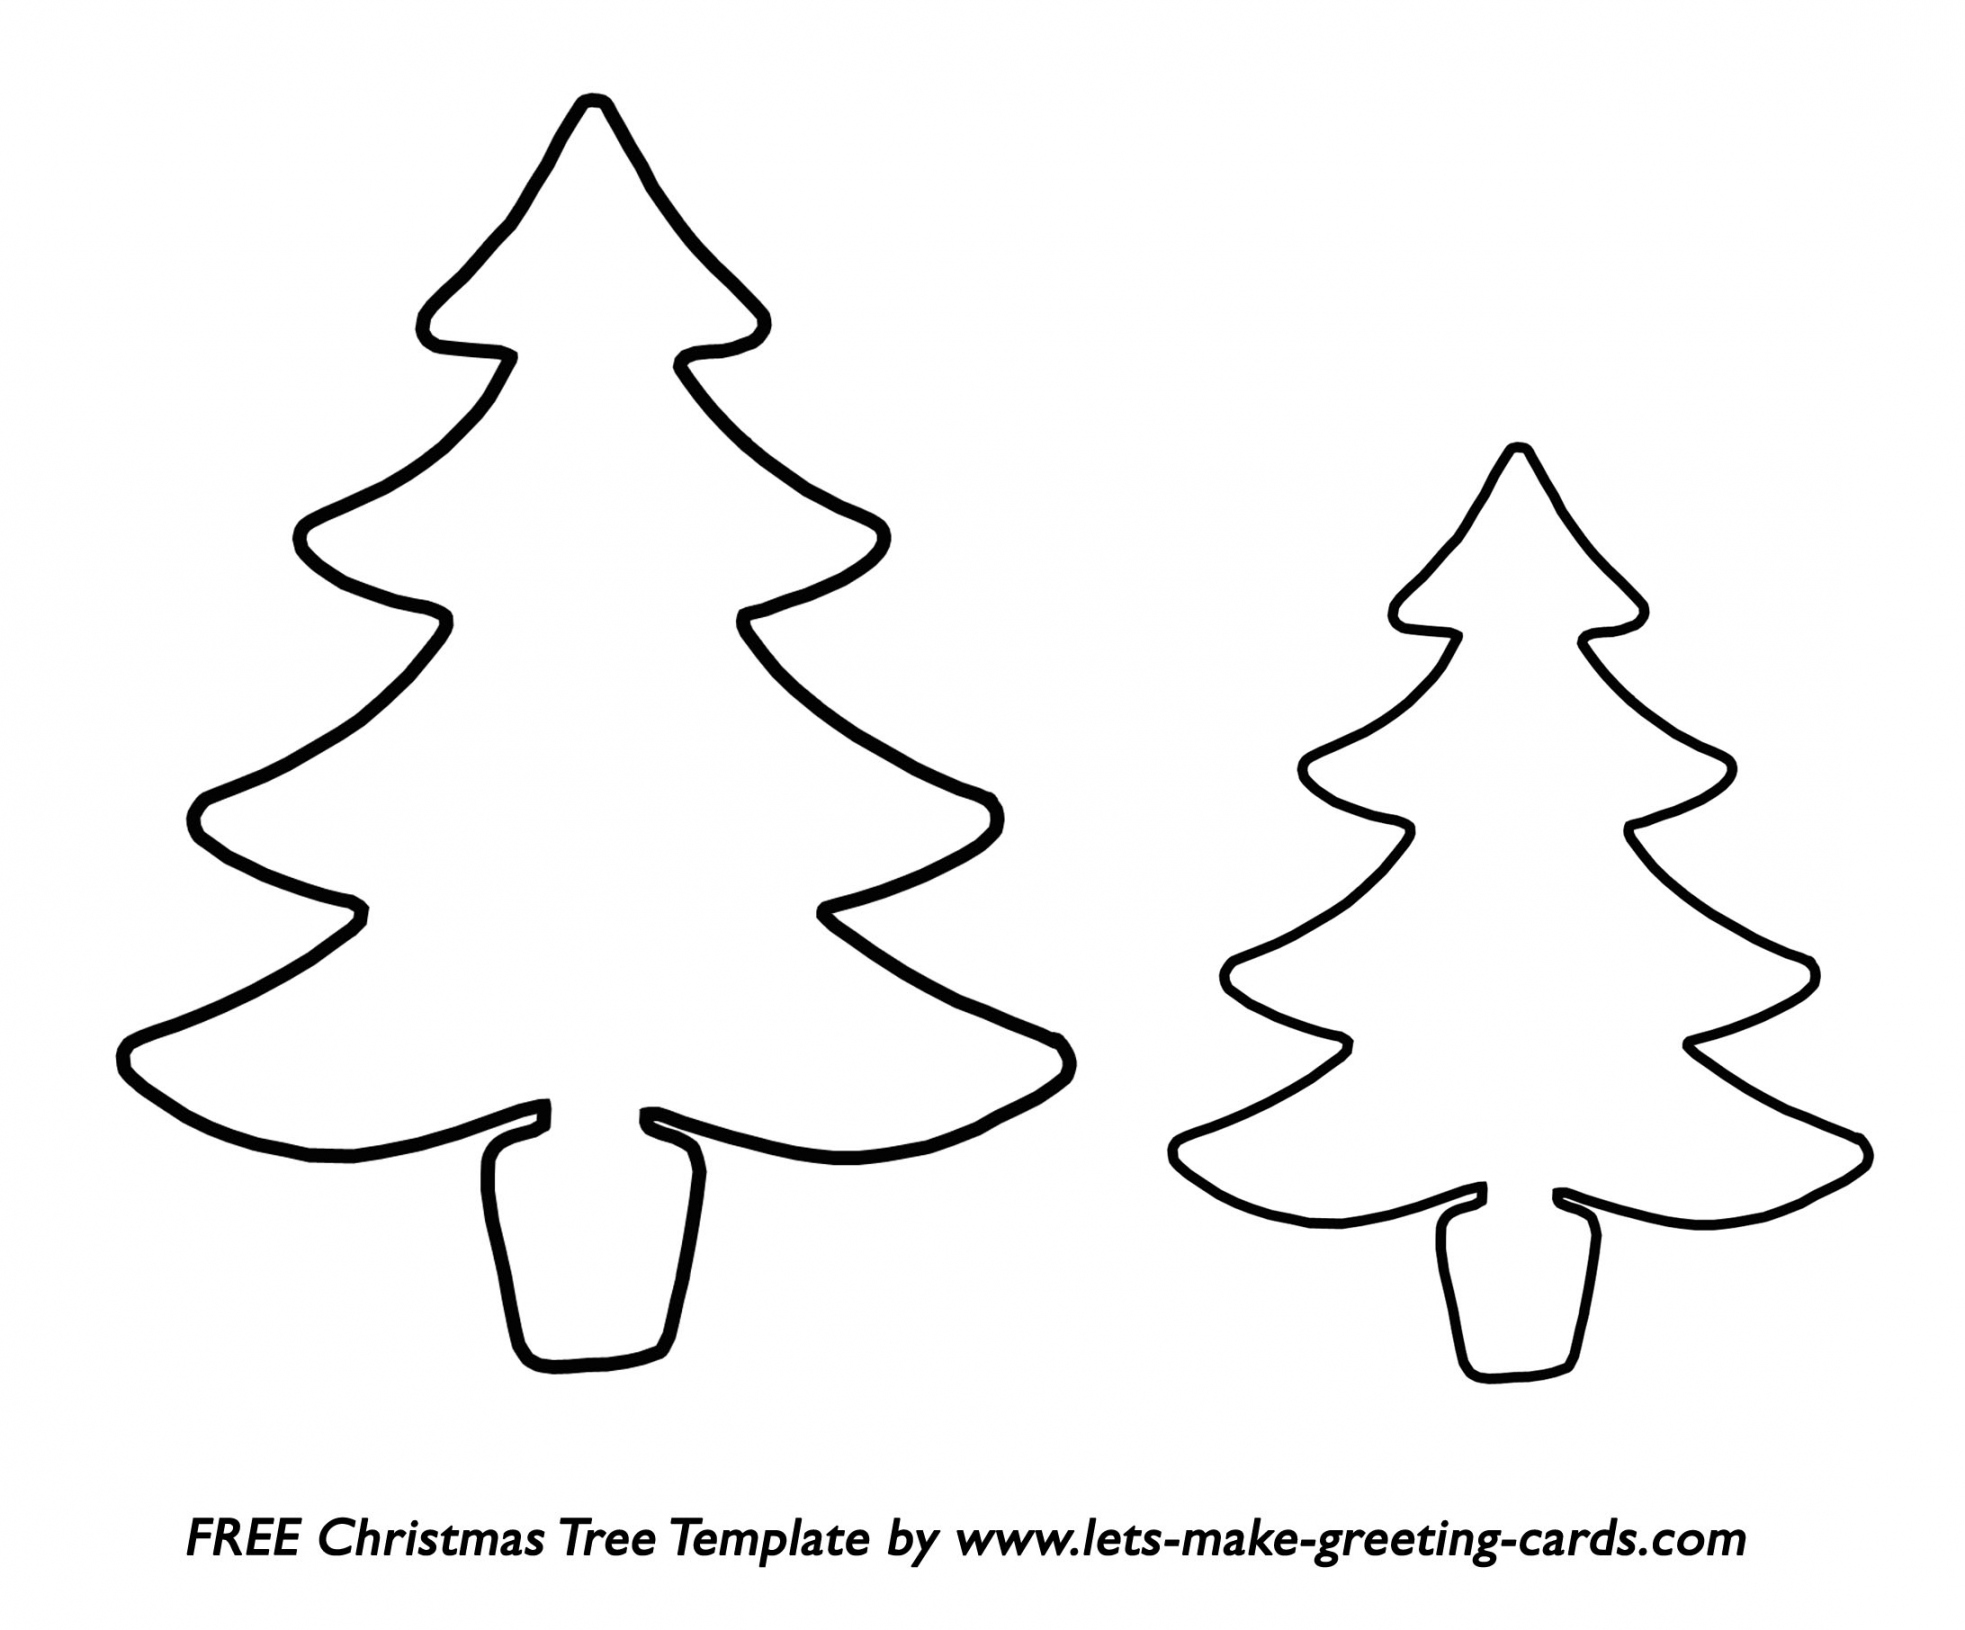 Free Christmas Tree Templates - FREE Printables - Christmas Tree Template